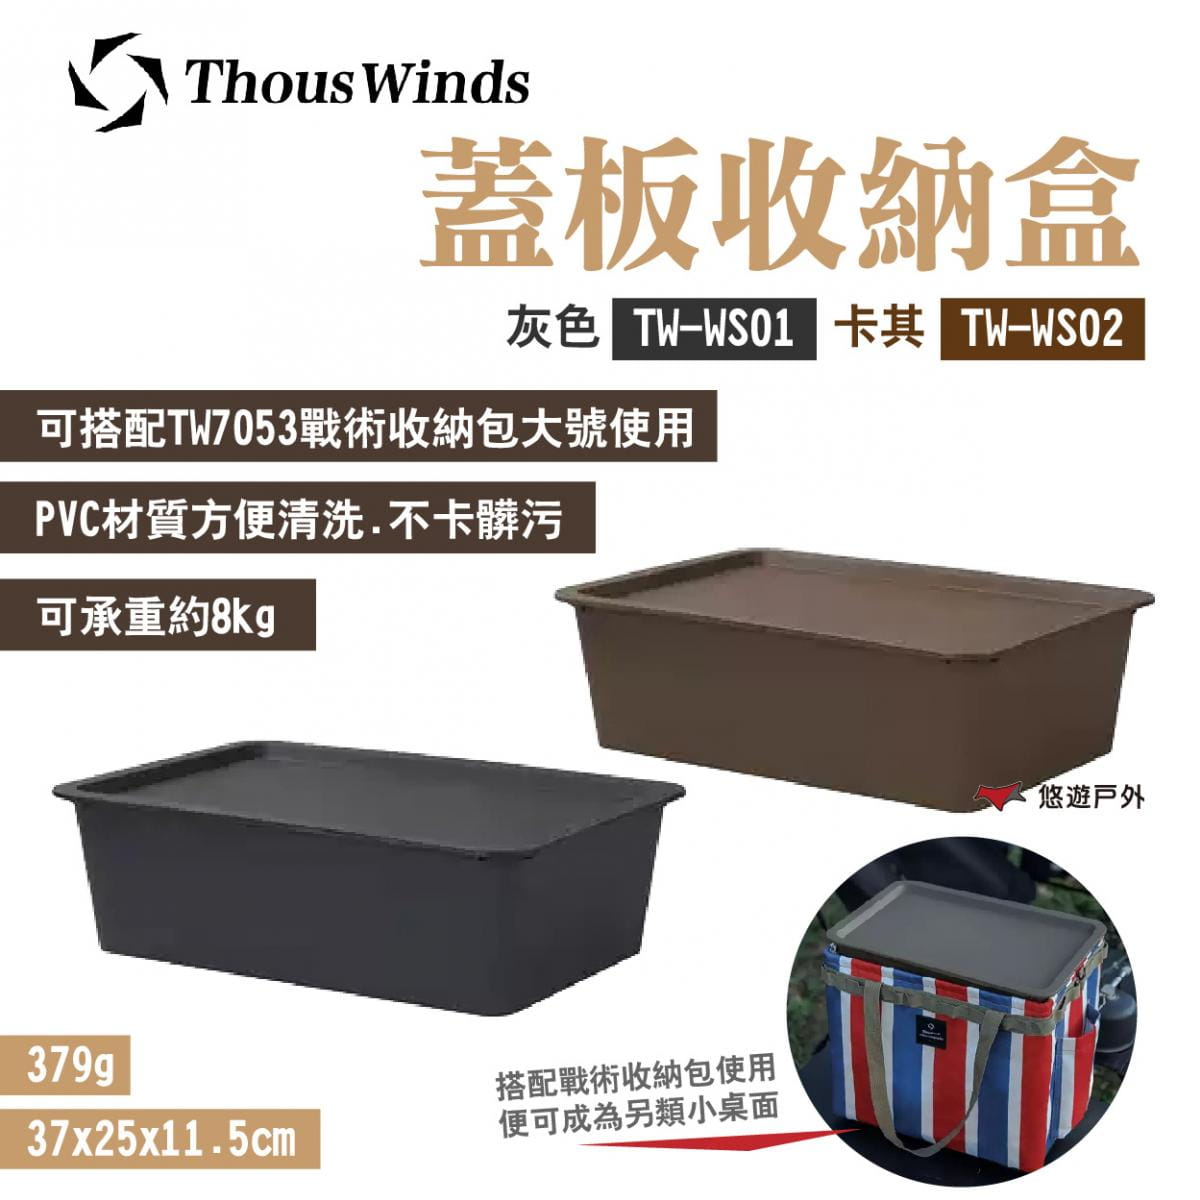 【Thous Winds】蓋板收納盒 TW-WS01.02 灰/卡其 (悠遊戶外) 0